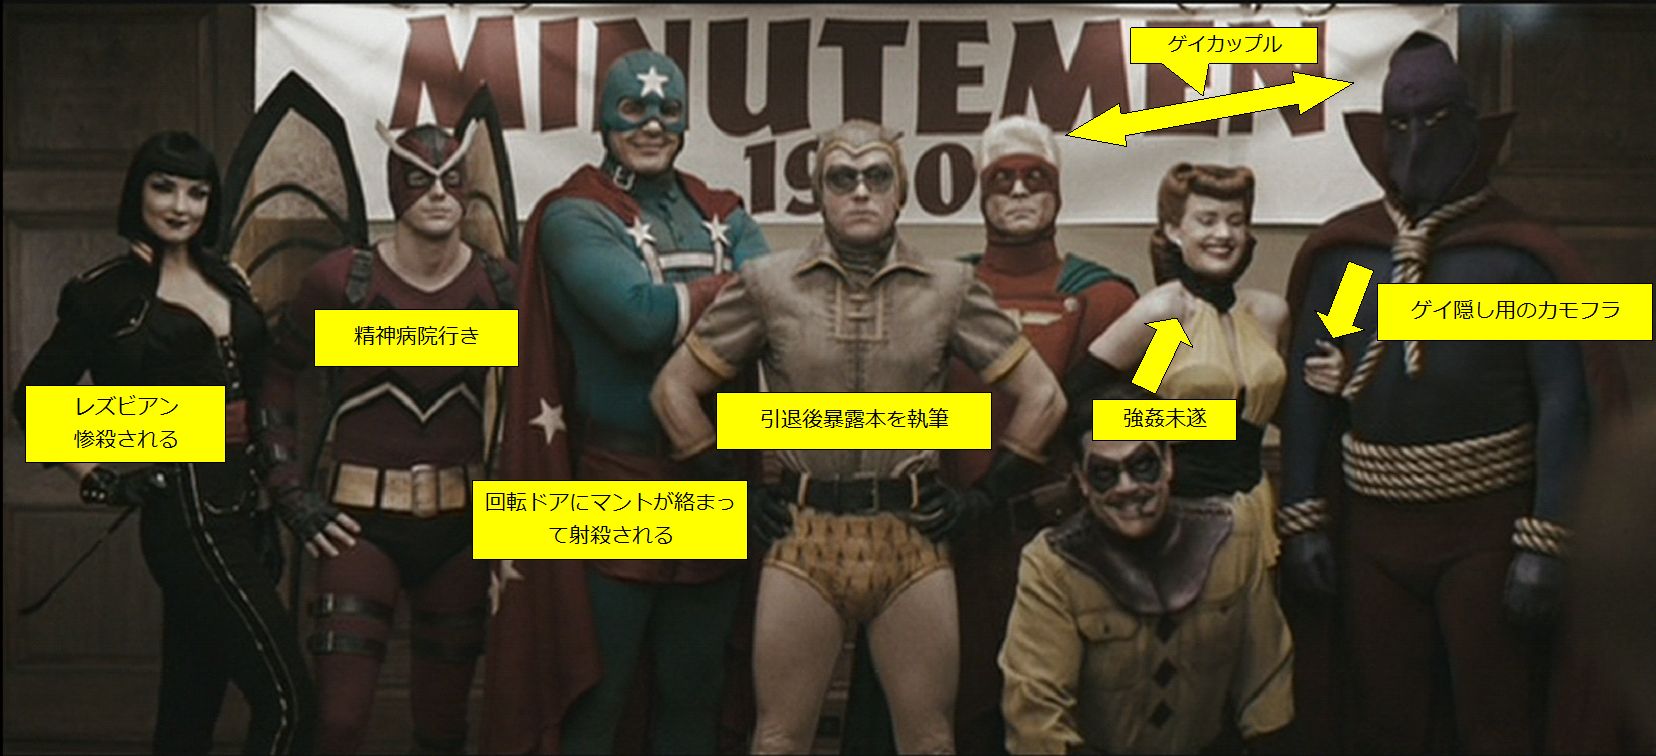 Watchmen 09 アメリカ映画 万事休すで茶を沸かす